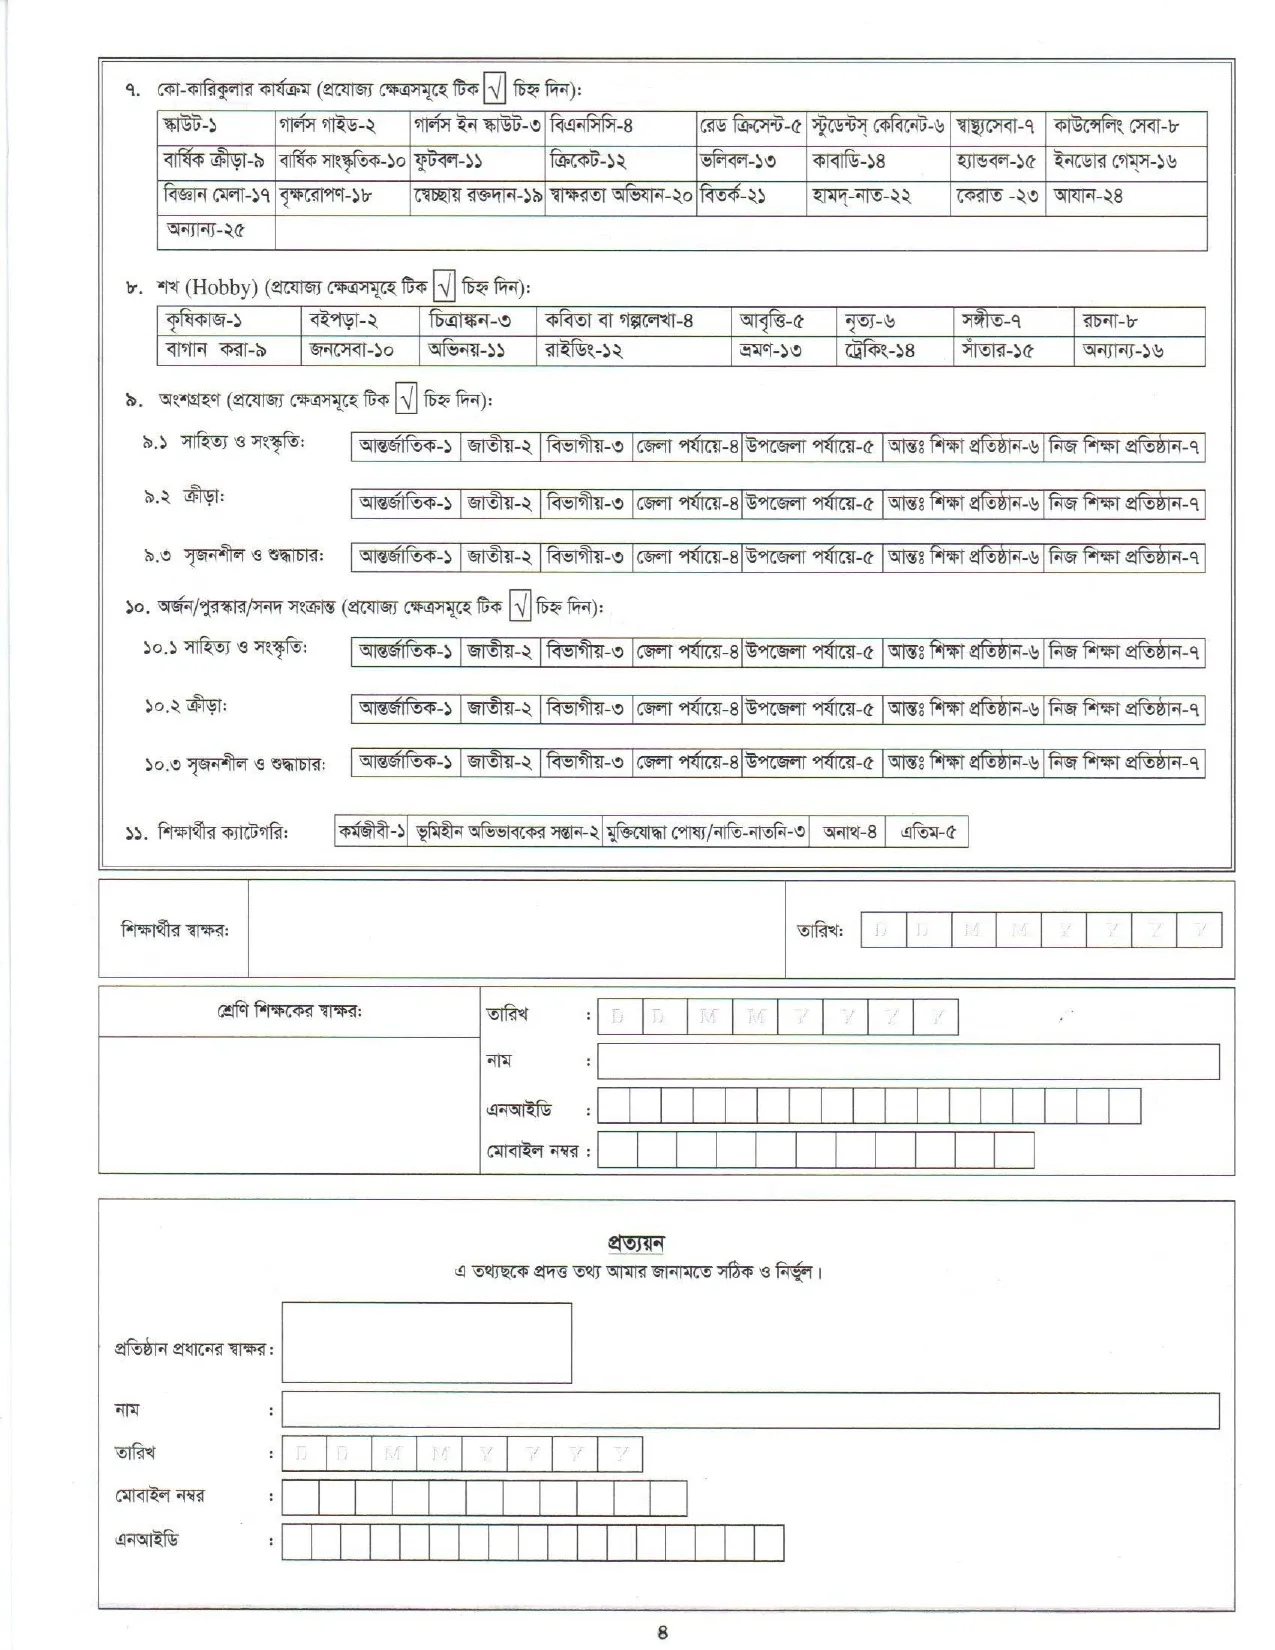 Student Profile Form PDF